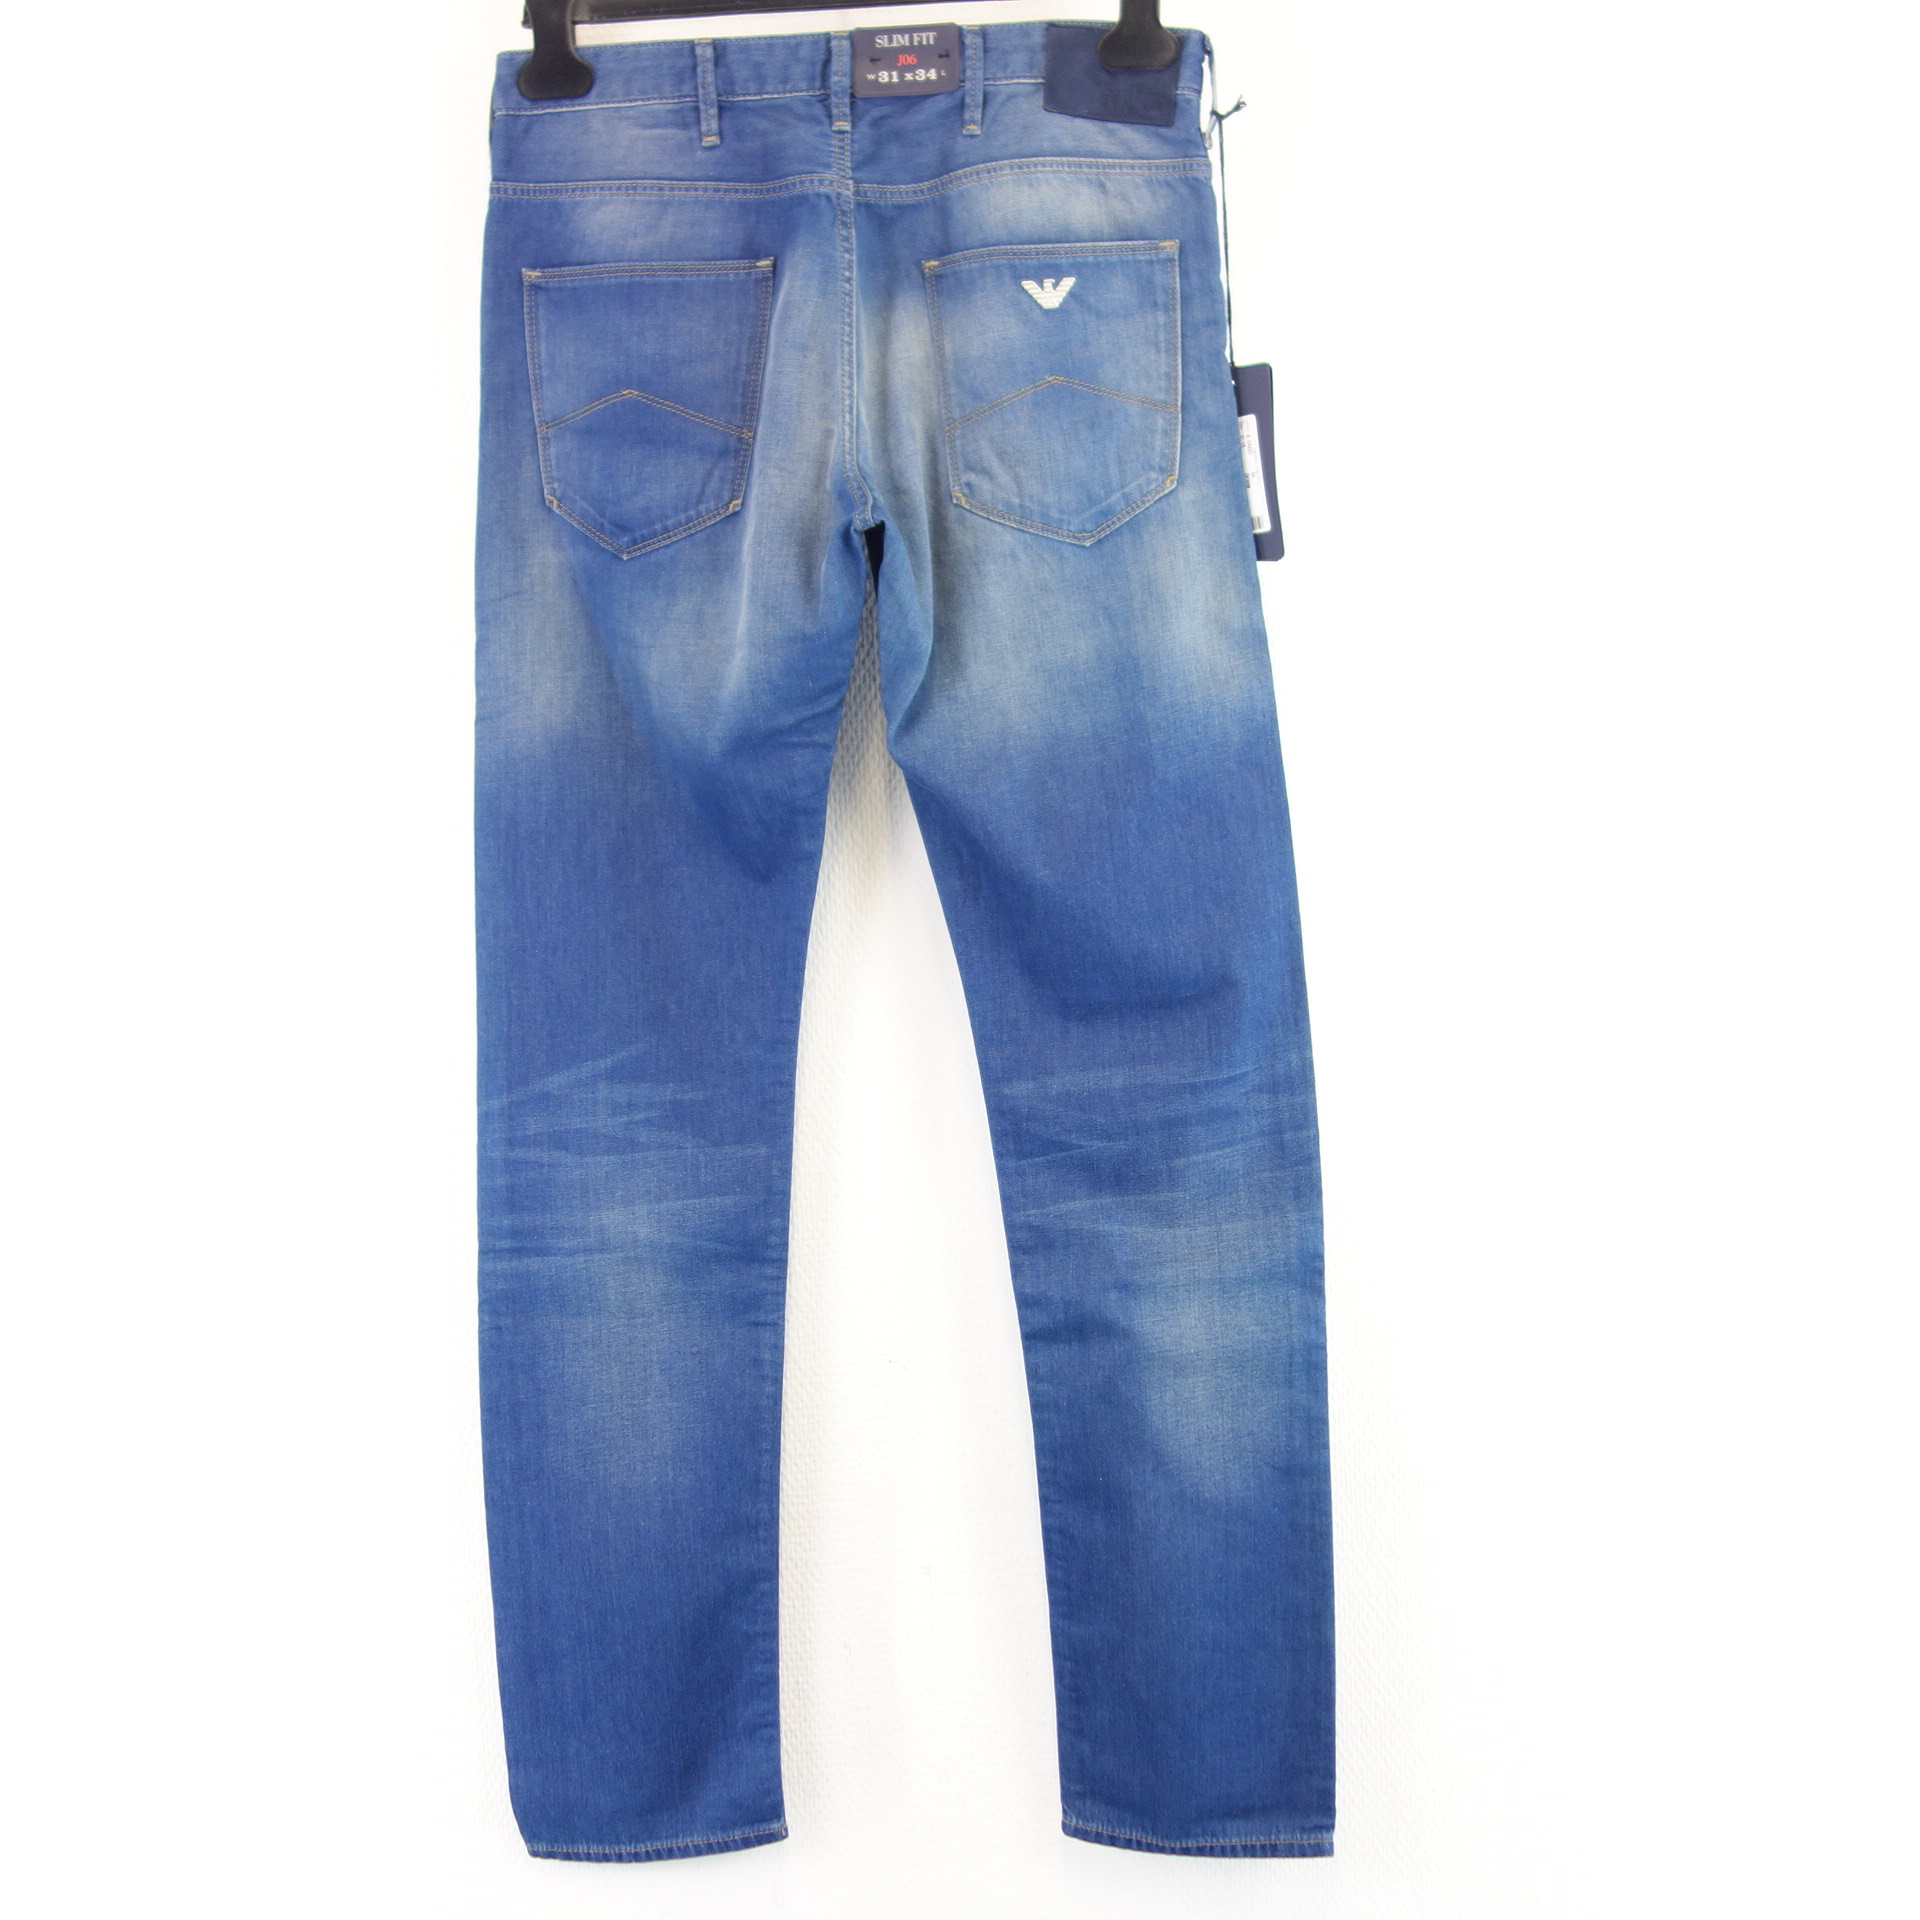 ARMANI JEANS Herren Jeans Hose Jeanshose J06 Blau 31 L34 Slim Fit Low Waist